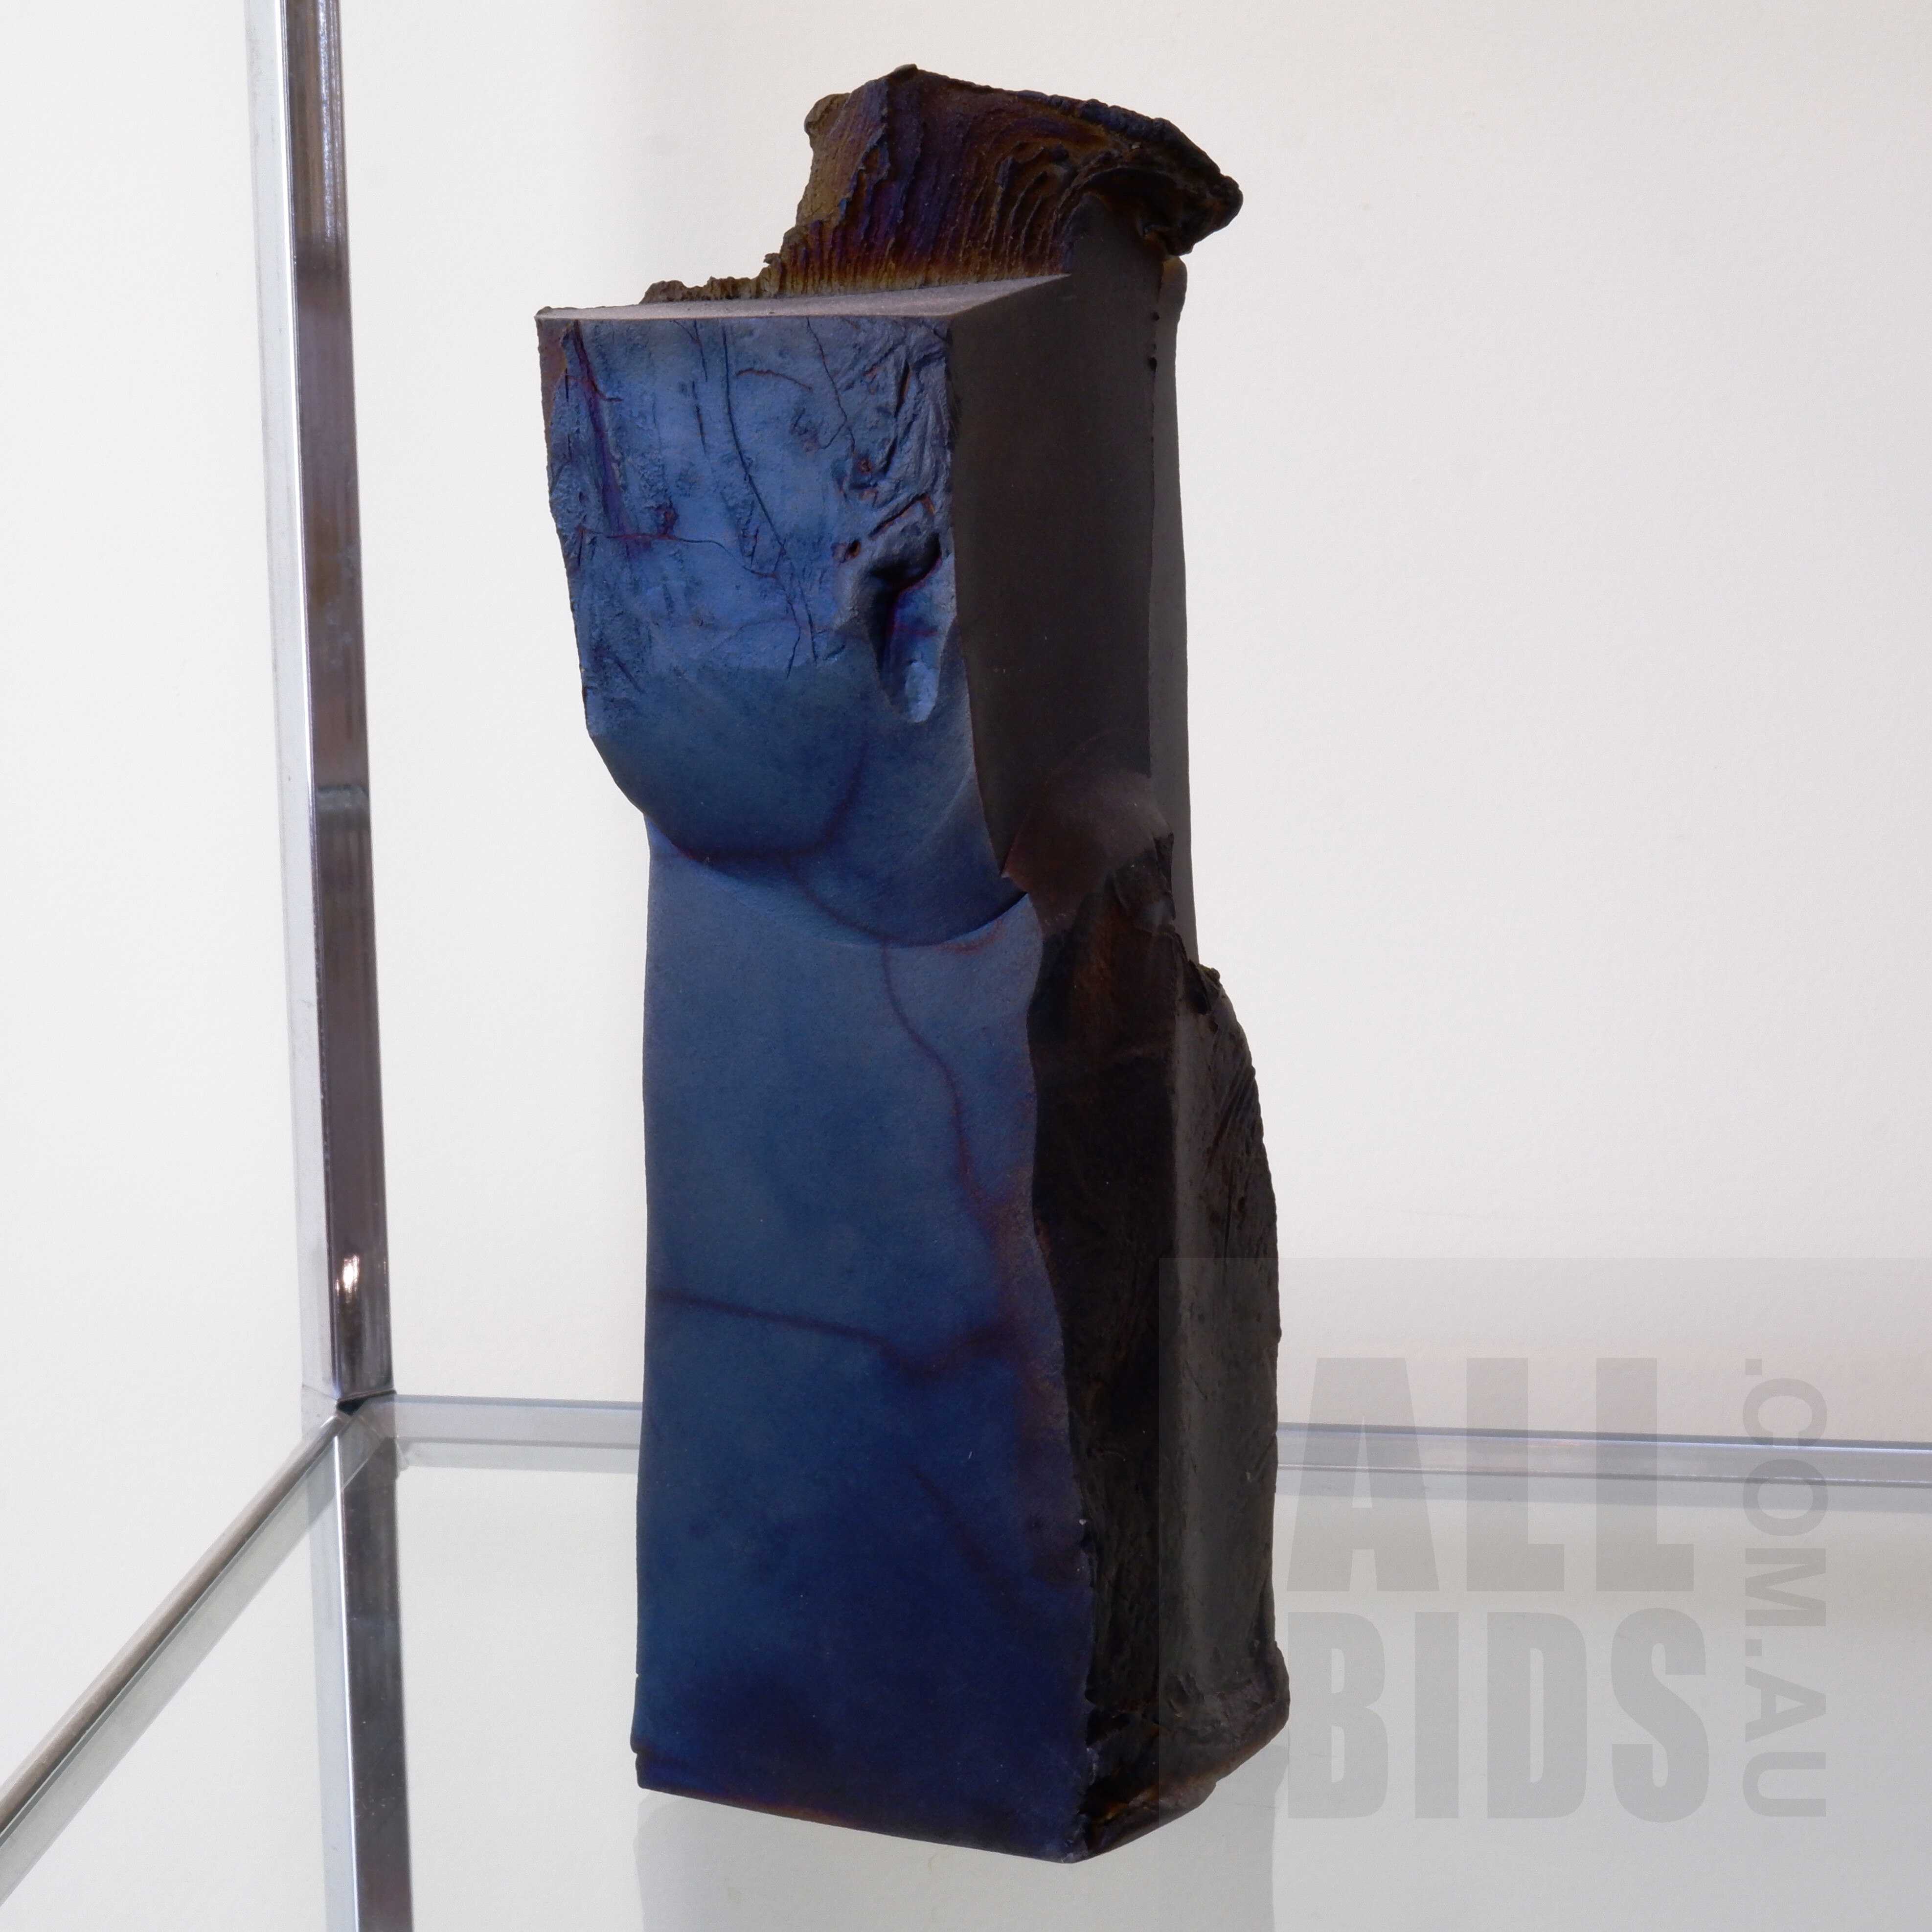 'Alan Watt (1941-) Black Fired Earthenware Form with Terra Sigillata and Copper Soda Fuming, 2001'